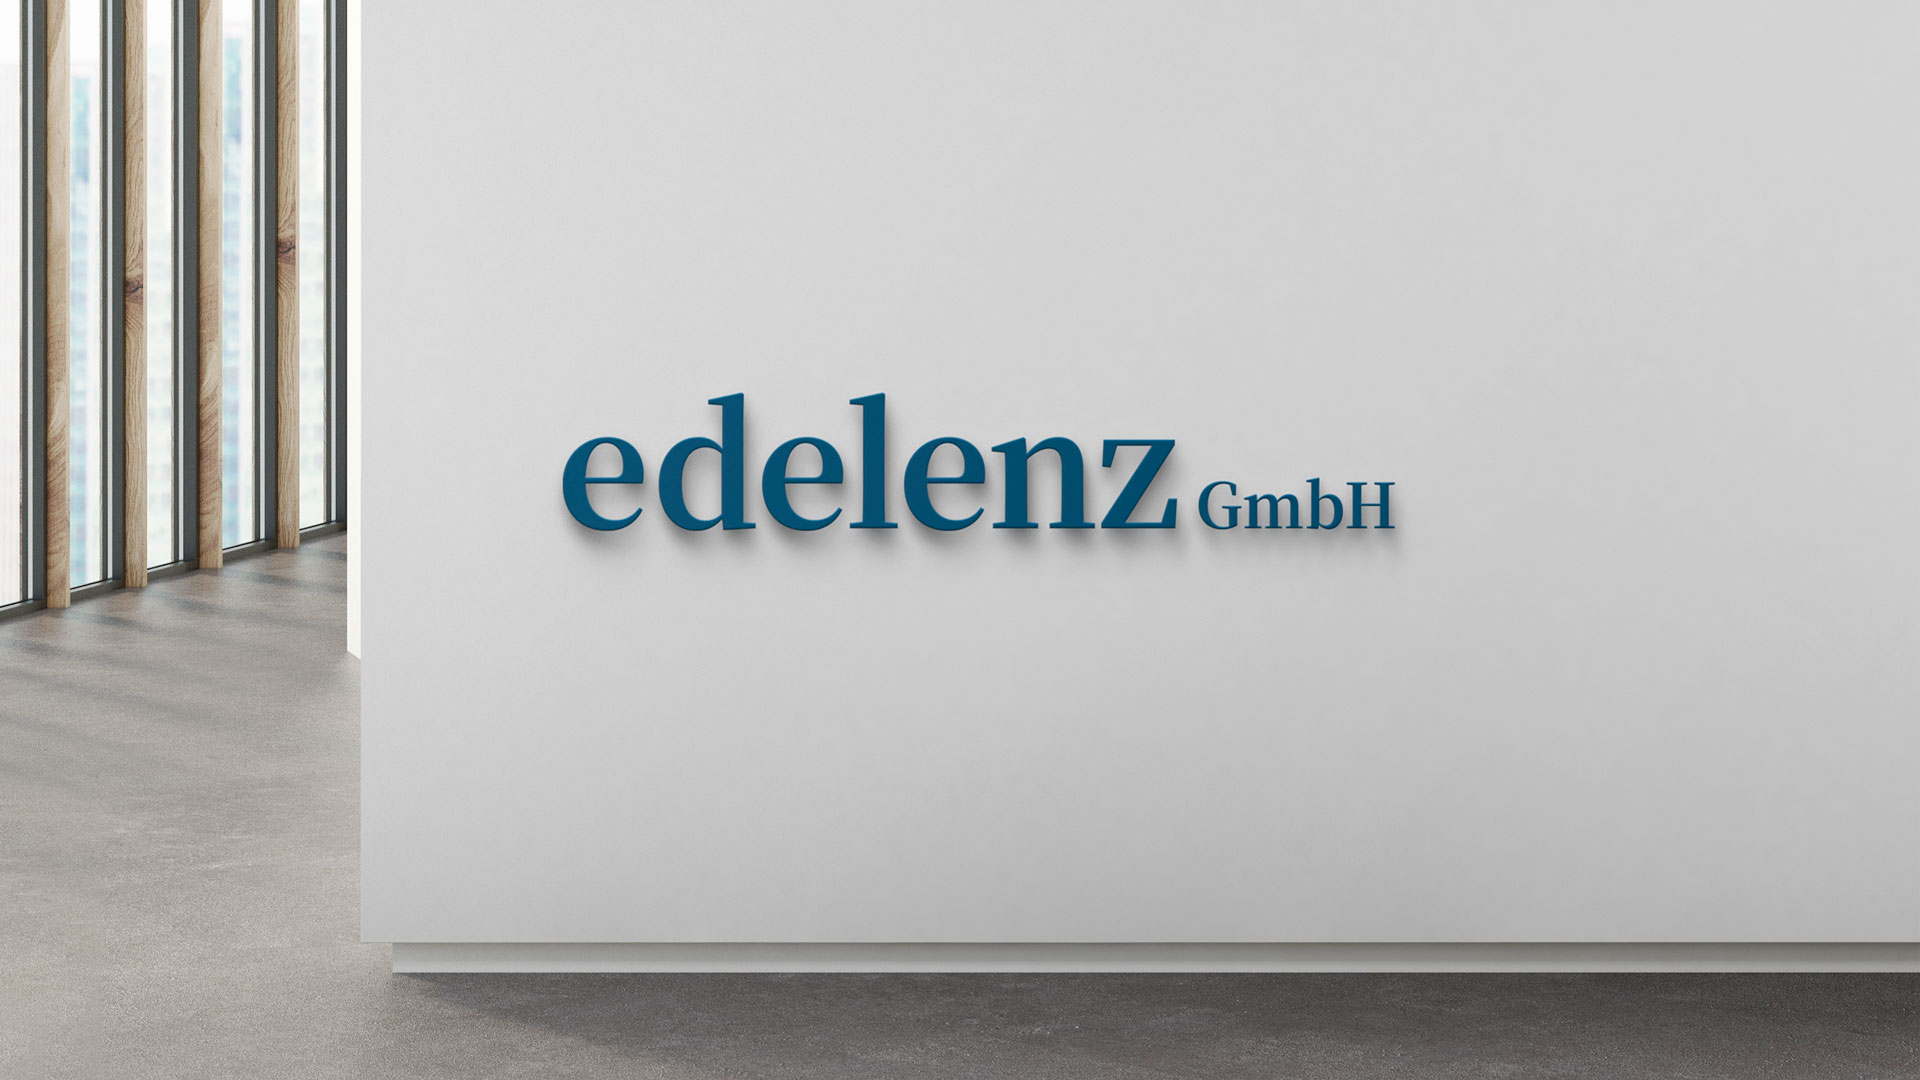 edelenz GmbH